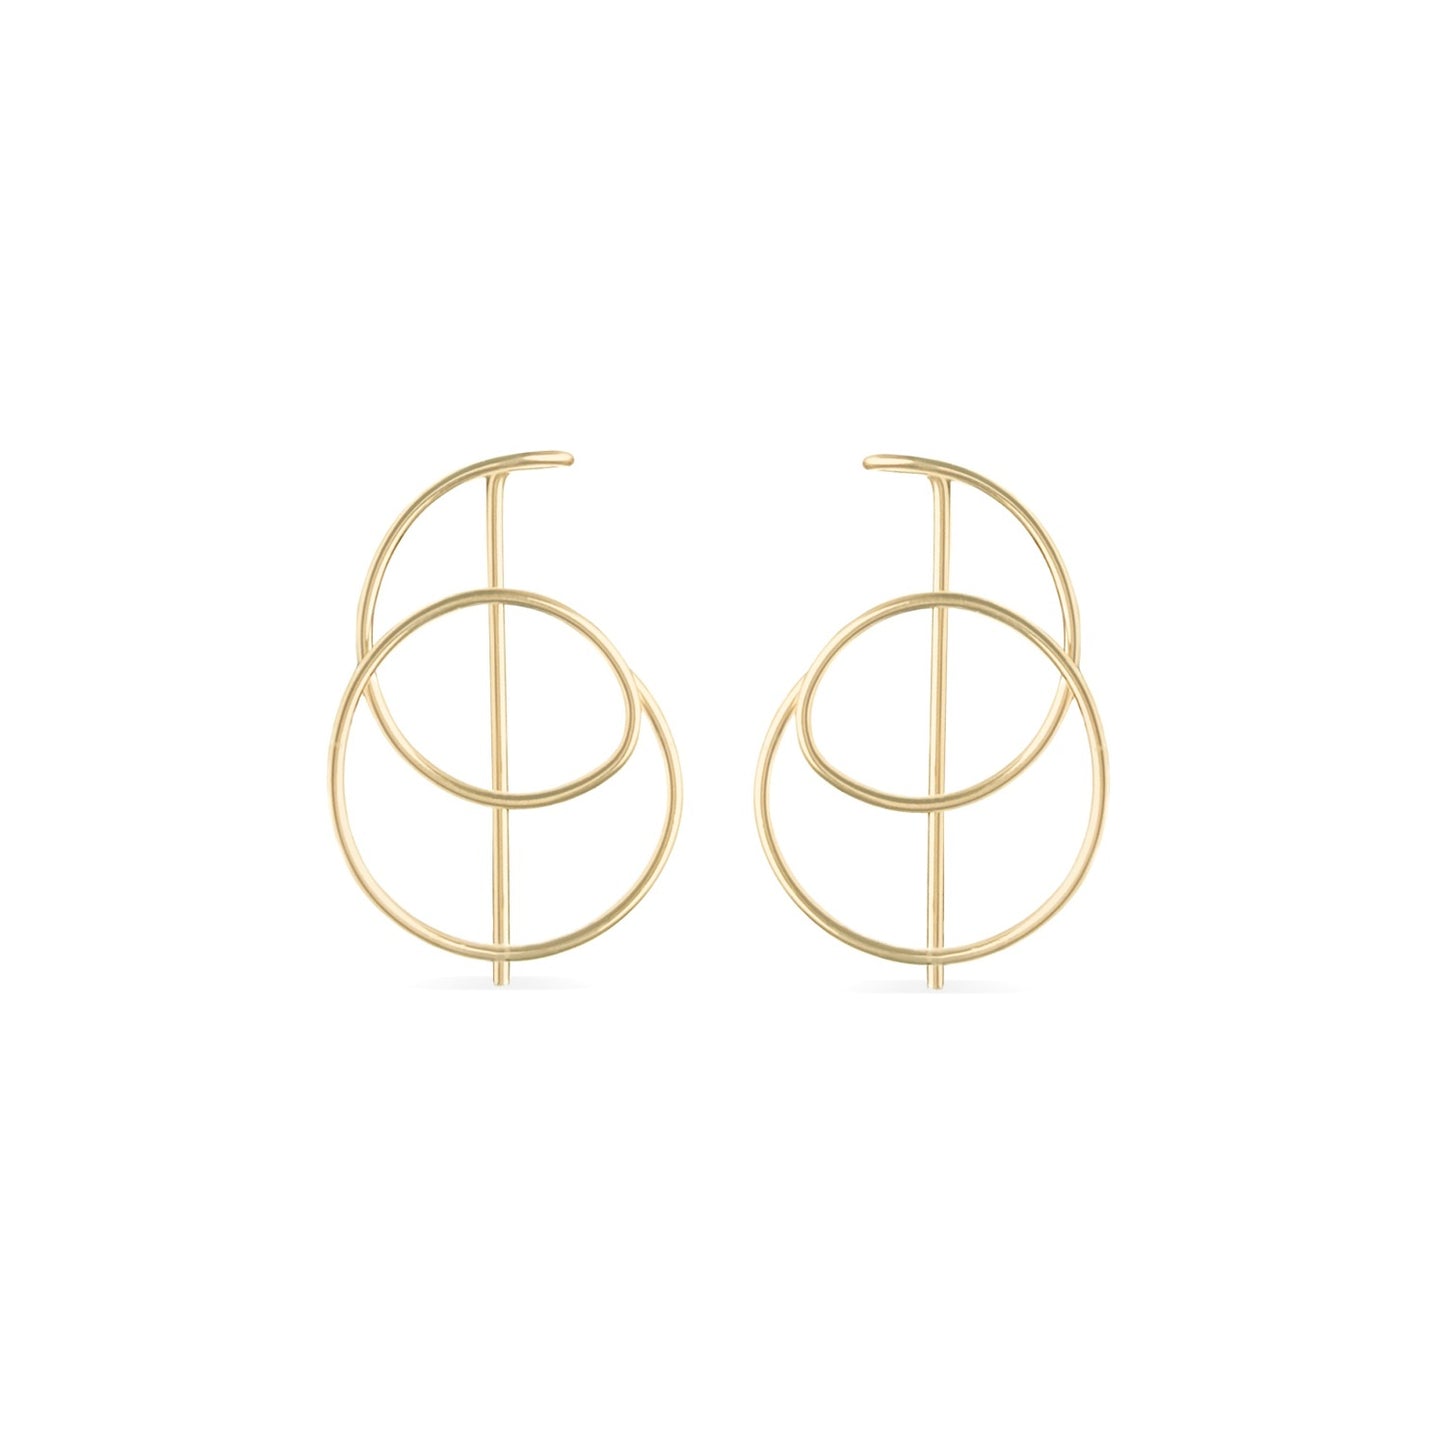 14K gold spiral hoop threader earrings